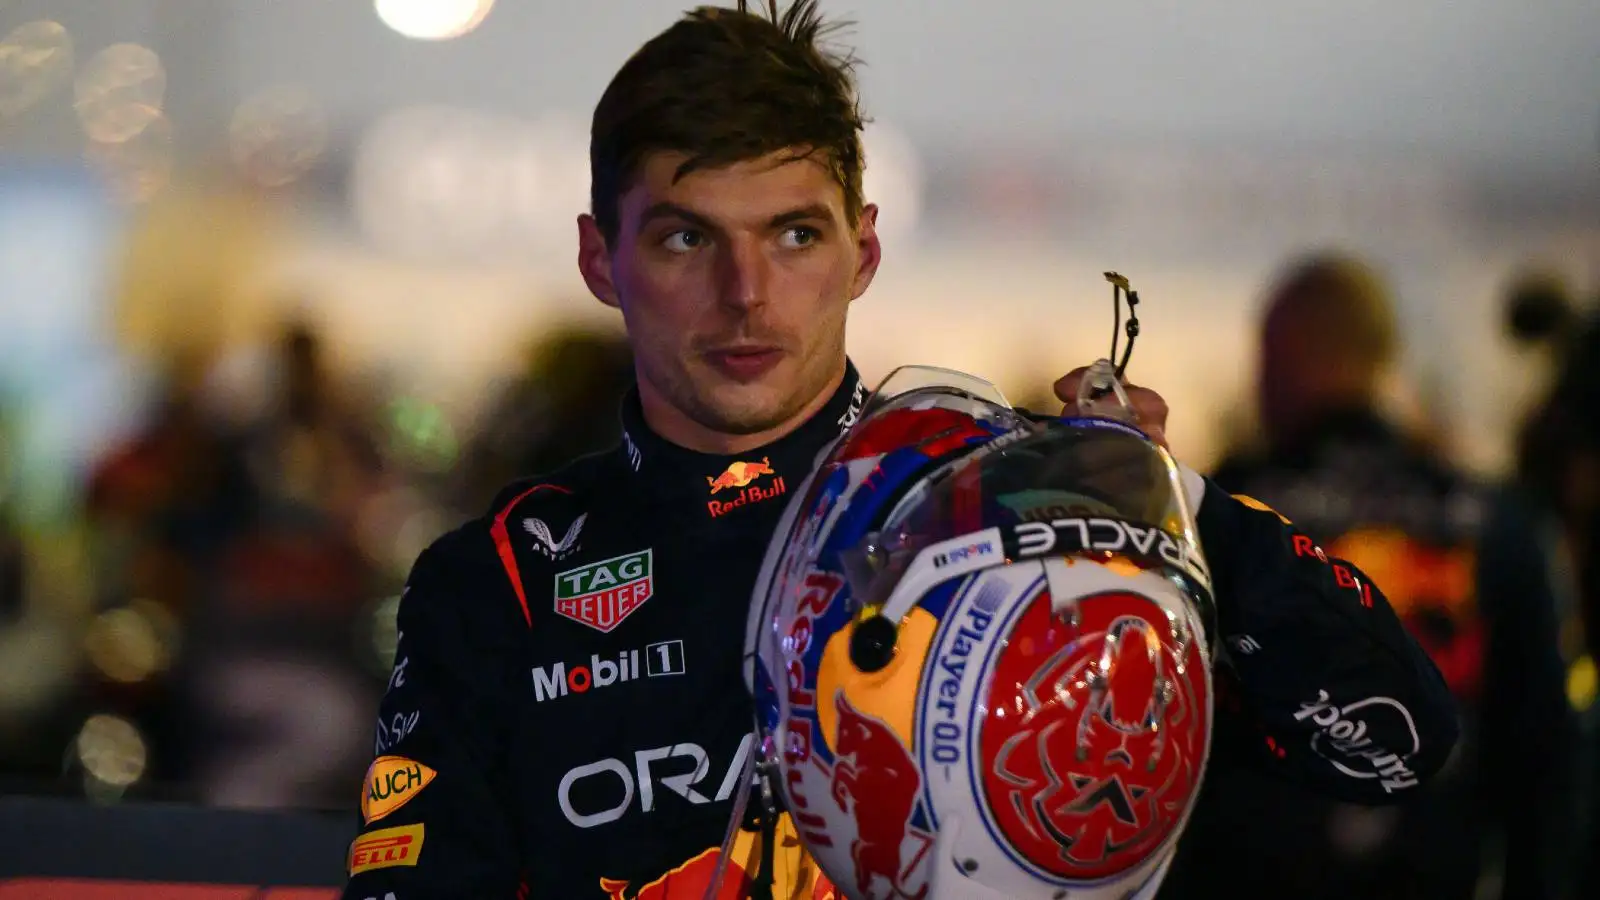 Red Bull driver Max Verstappen holding his helmet after winning the Bahrain Grand Prix.